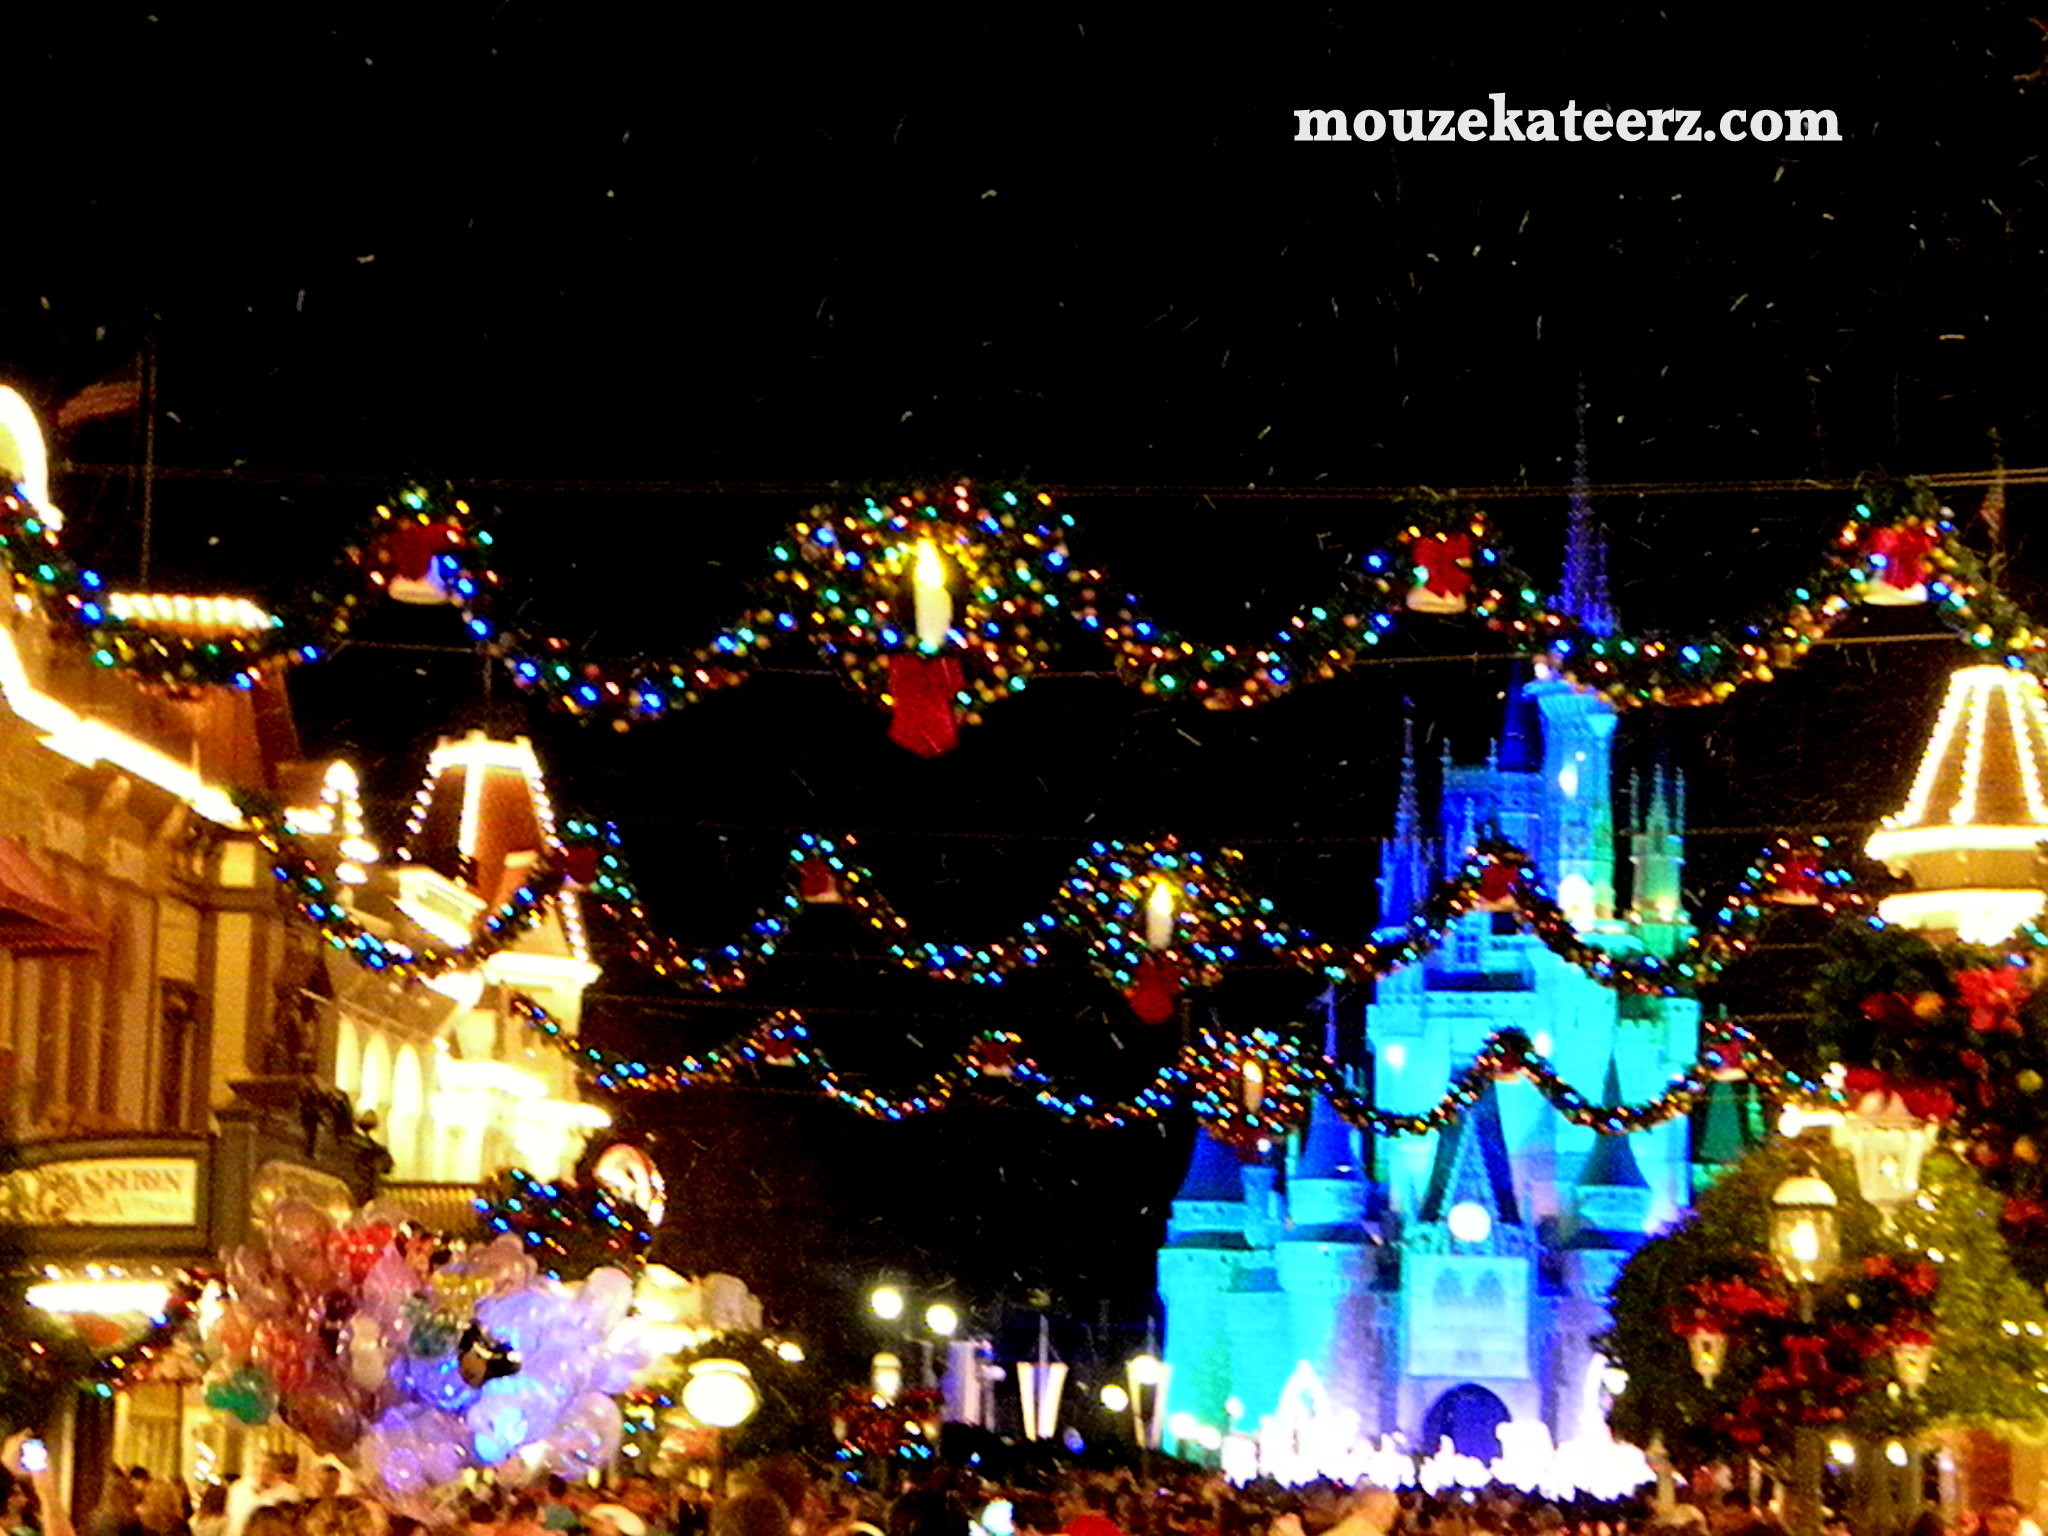 Disneyland Christmas Wallpapers